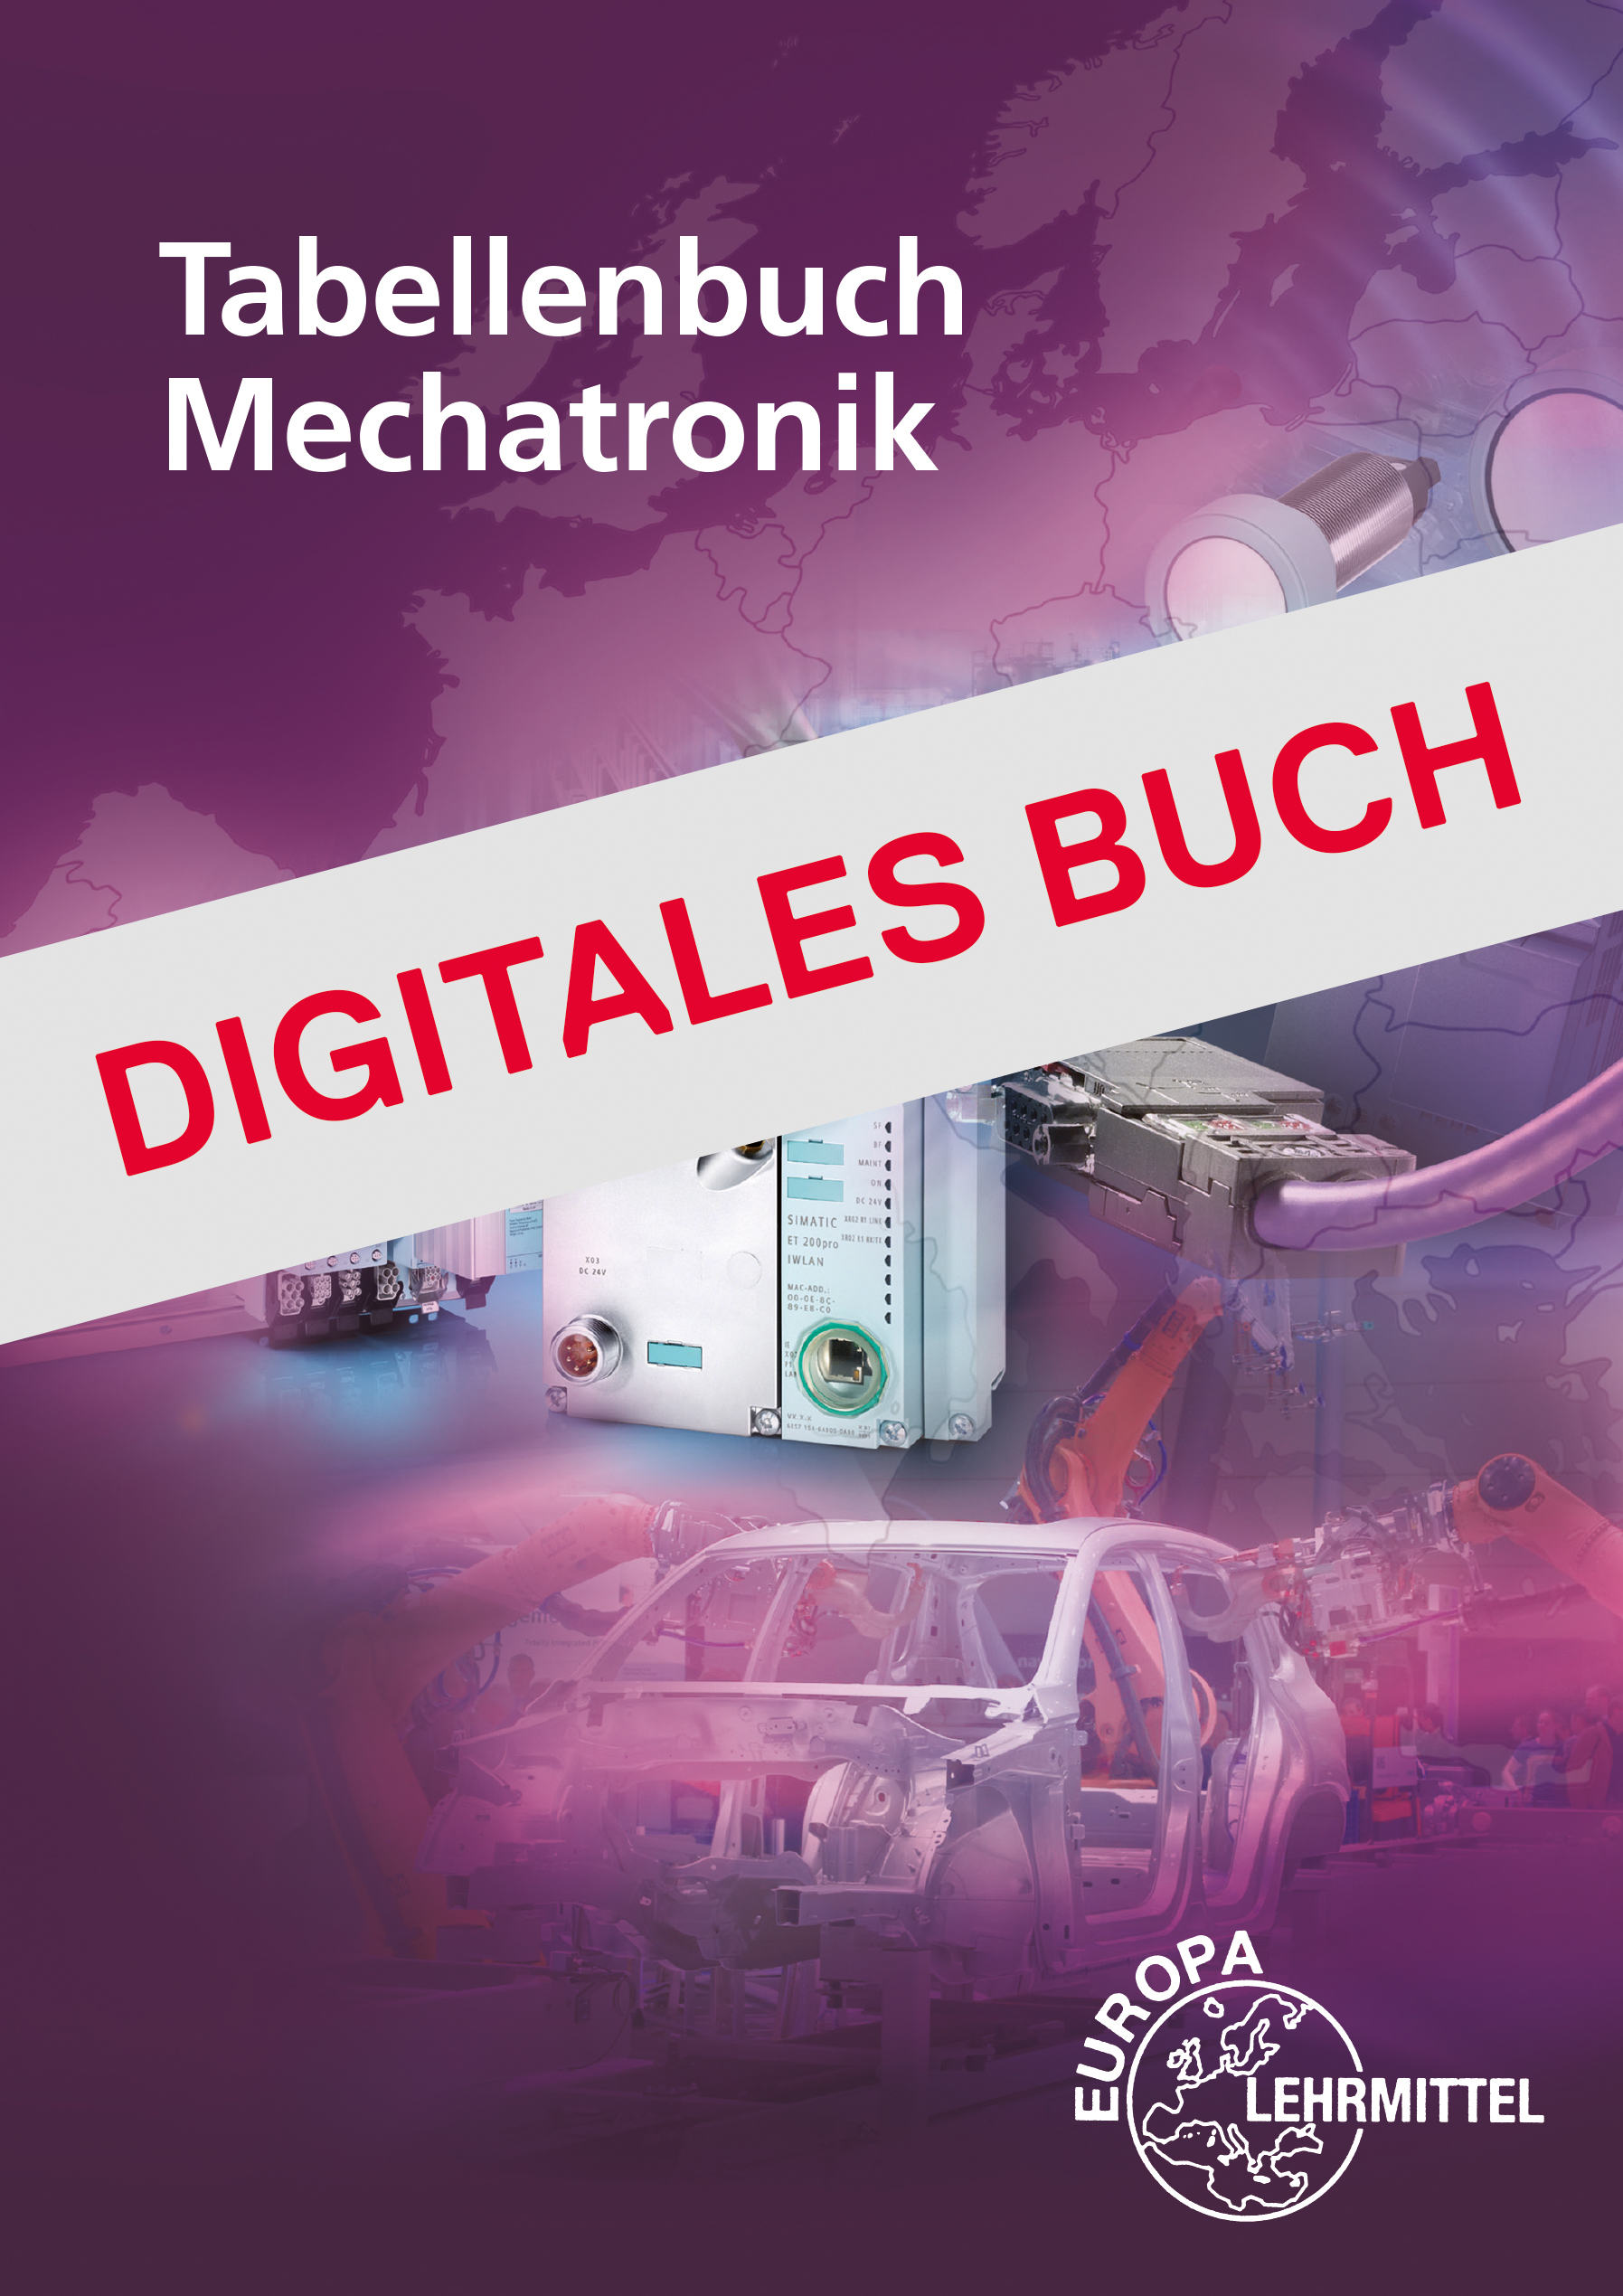 Tabellenbuch Mechatronik - Digitales Buch